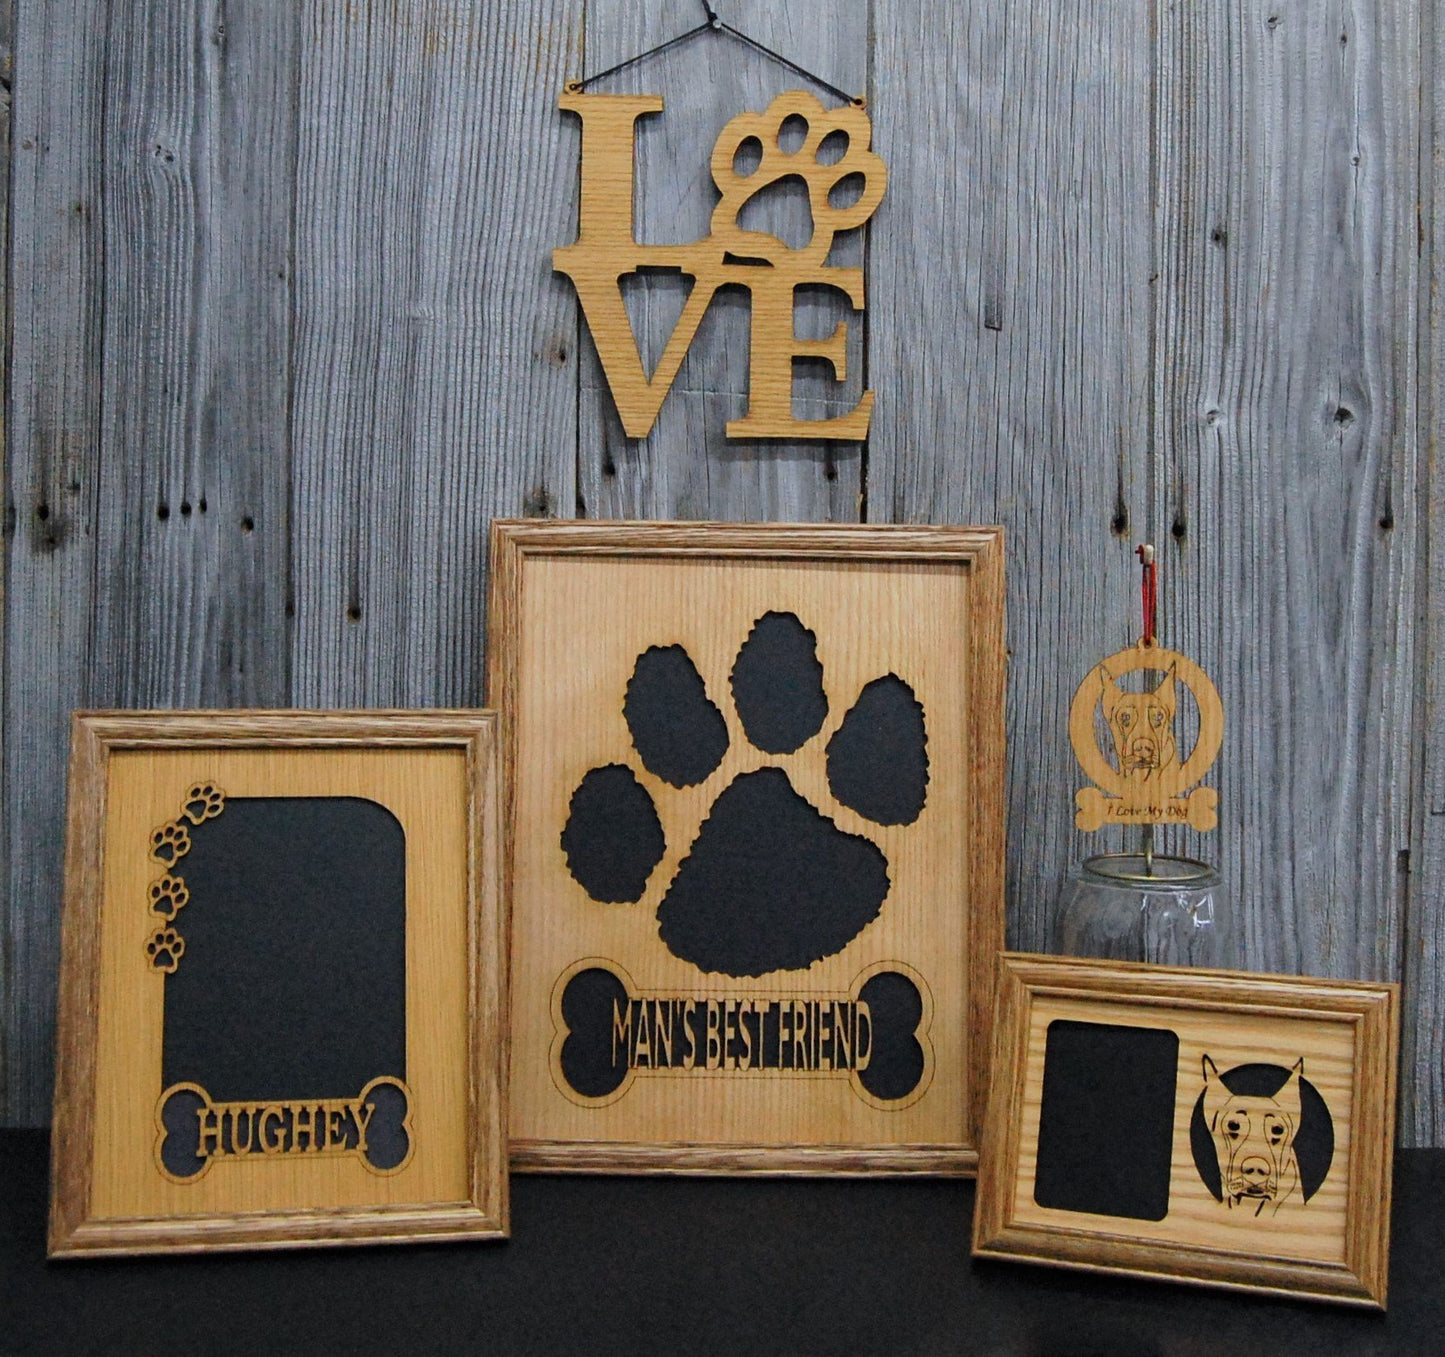 Dog Lover Gift Set